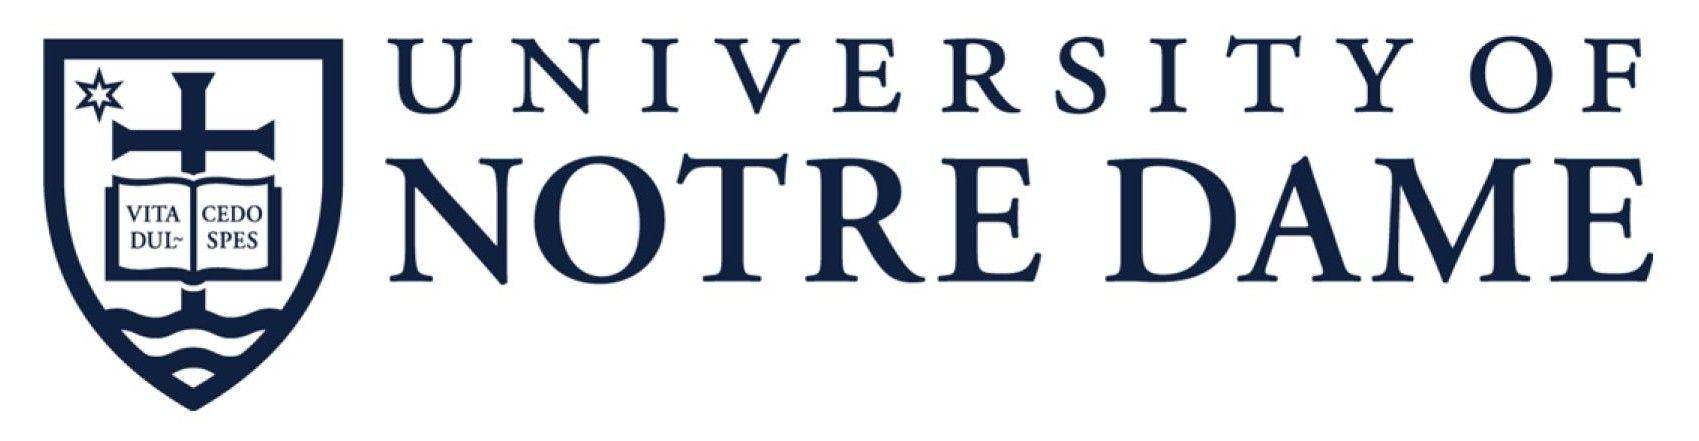 University of Notre Dame Logo - University of Notre Dame Logo | notre dame | Pinterest | Notre dame ...